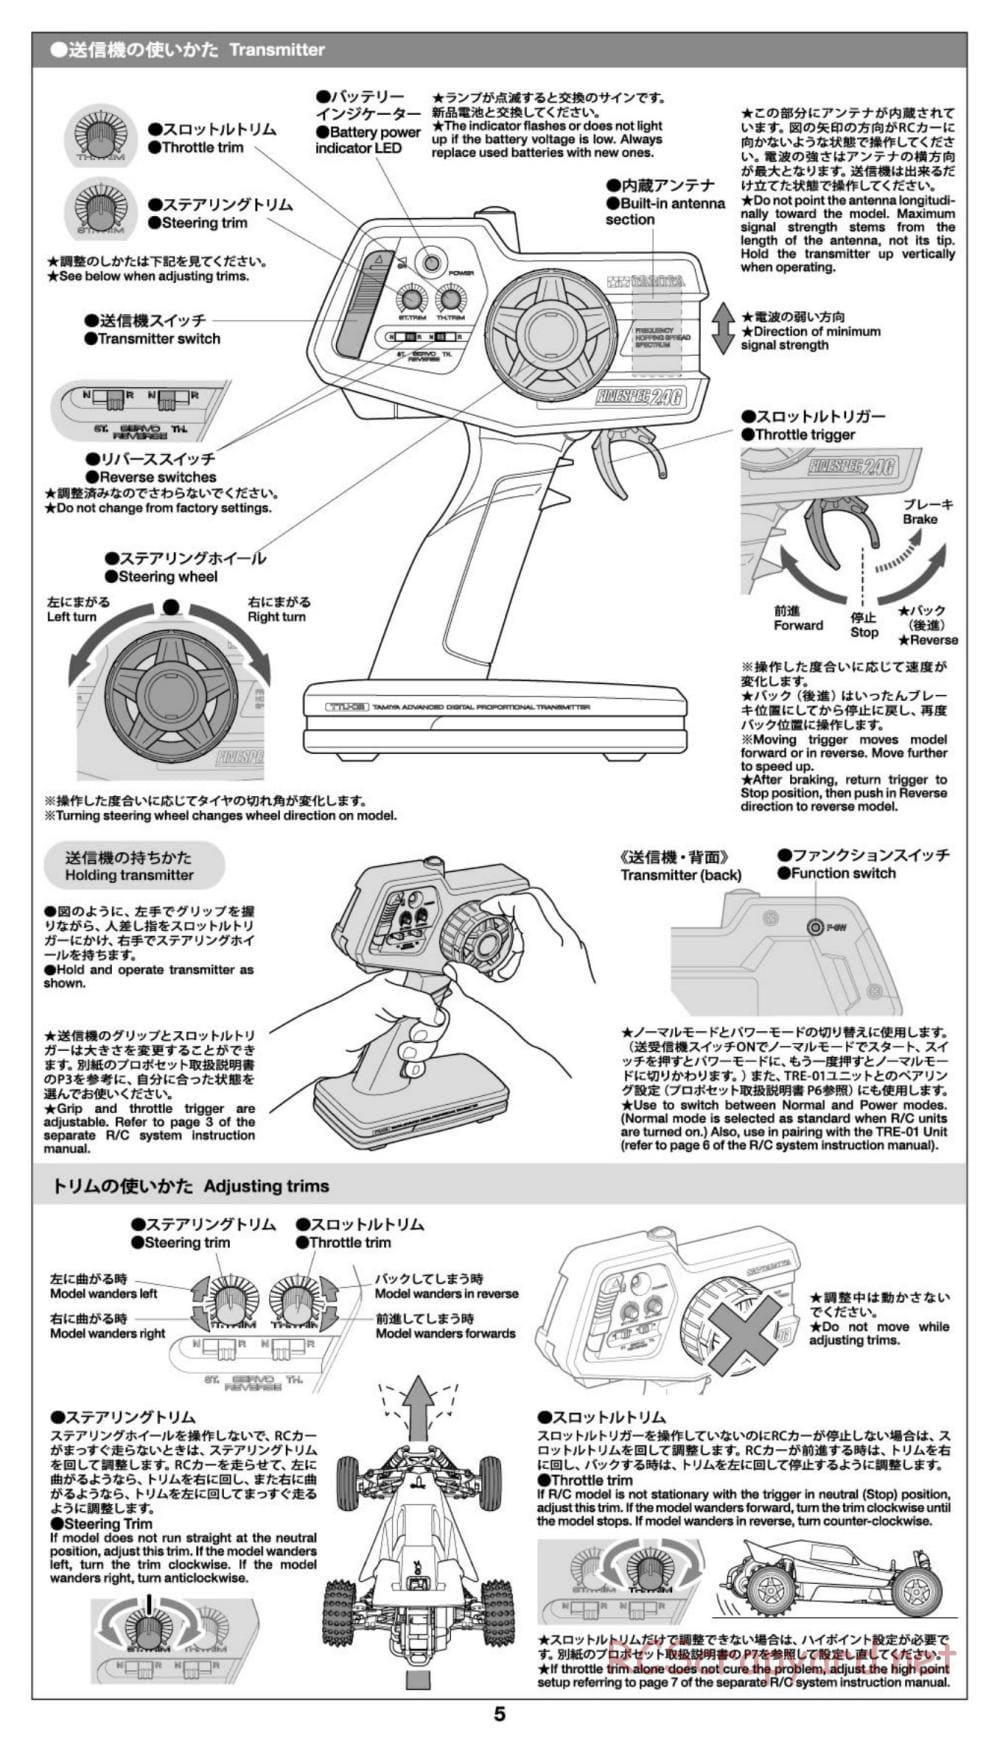 Tamiya - GB-01S Chassis - Manual - Page 5